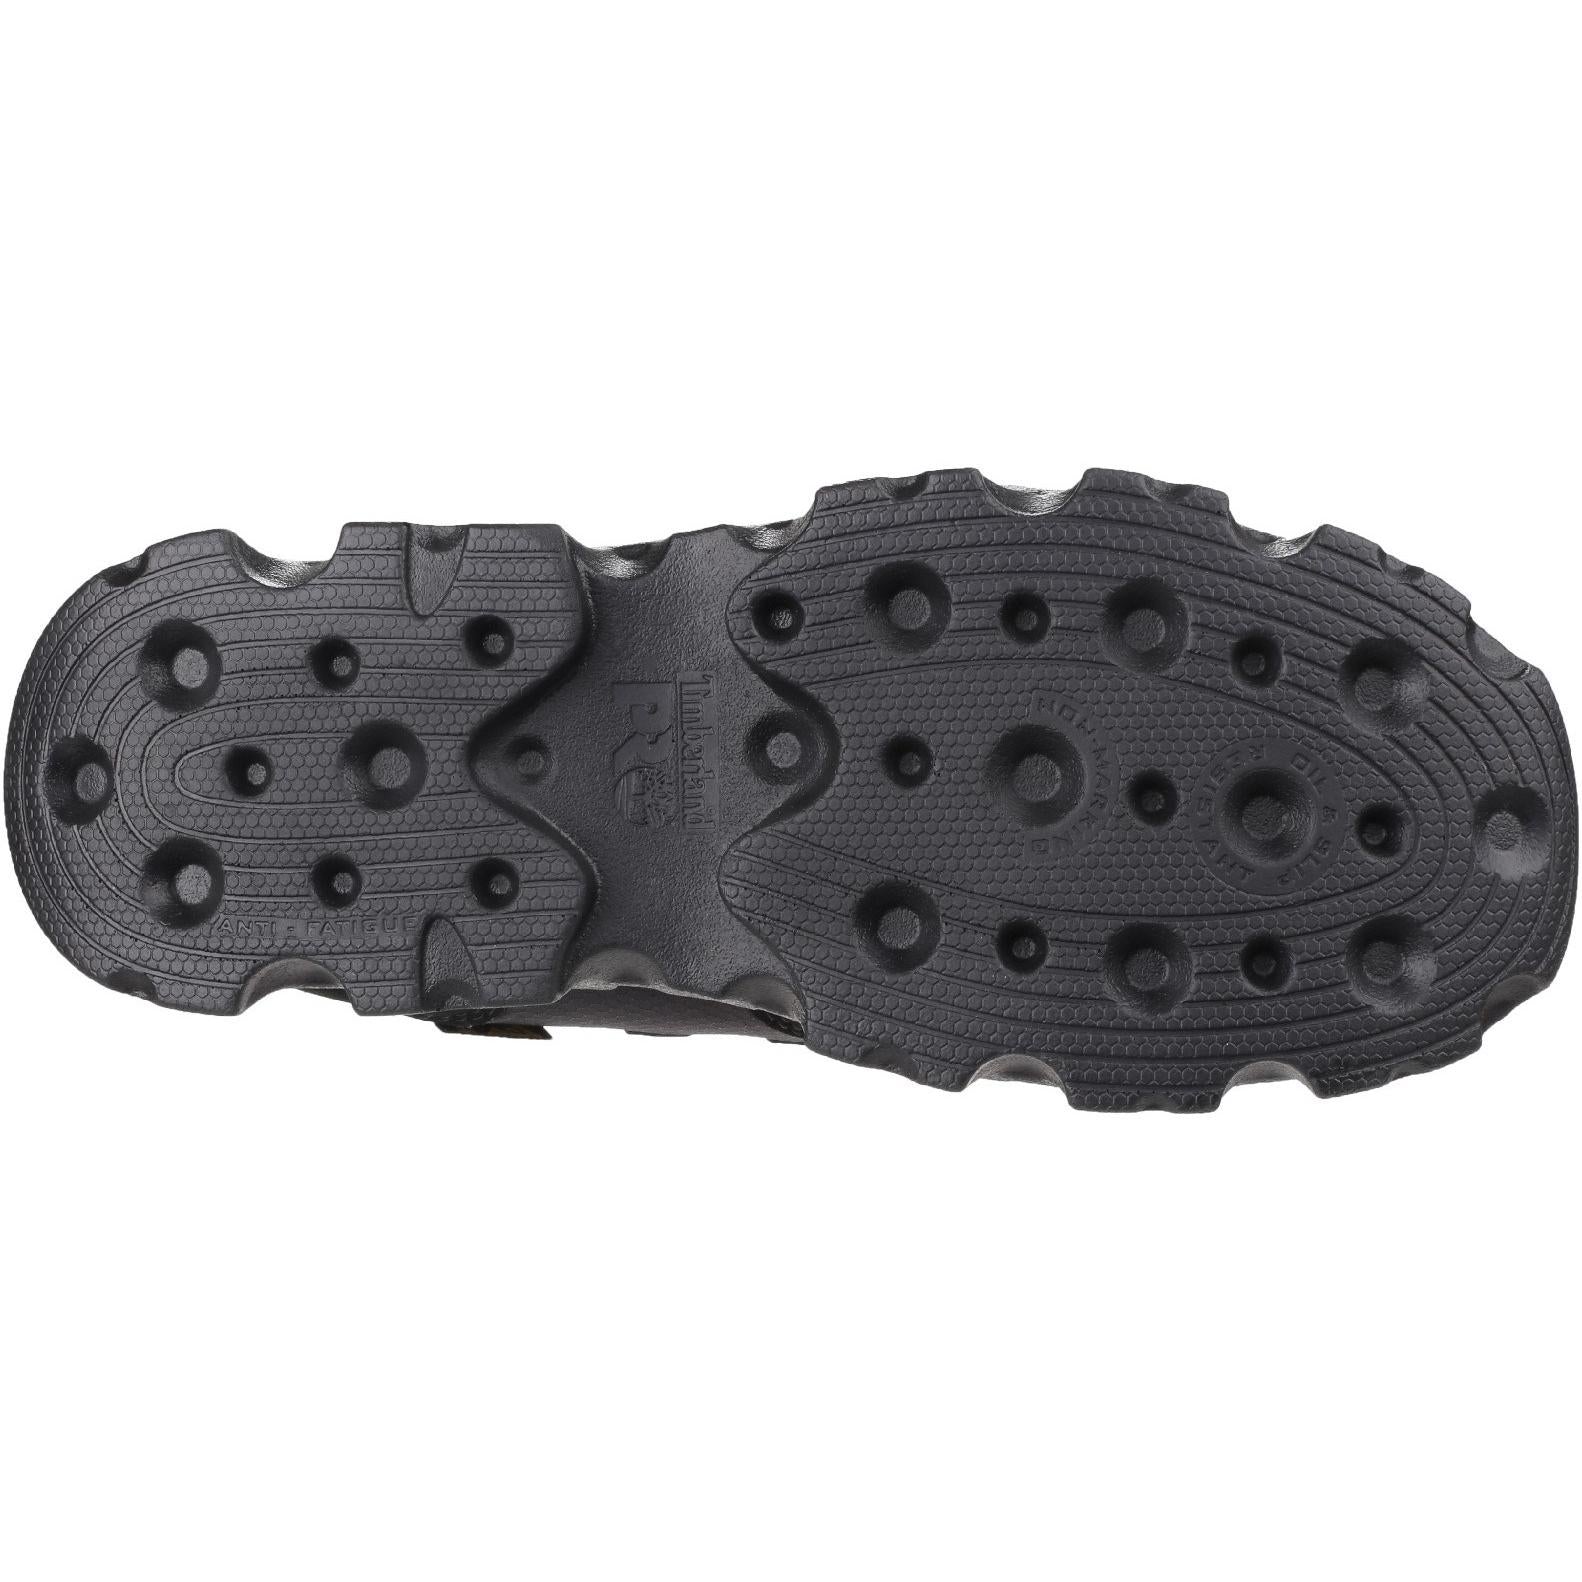 Timberland Pro Powertrain Low Lace-up Safety Shoe